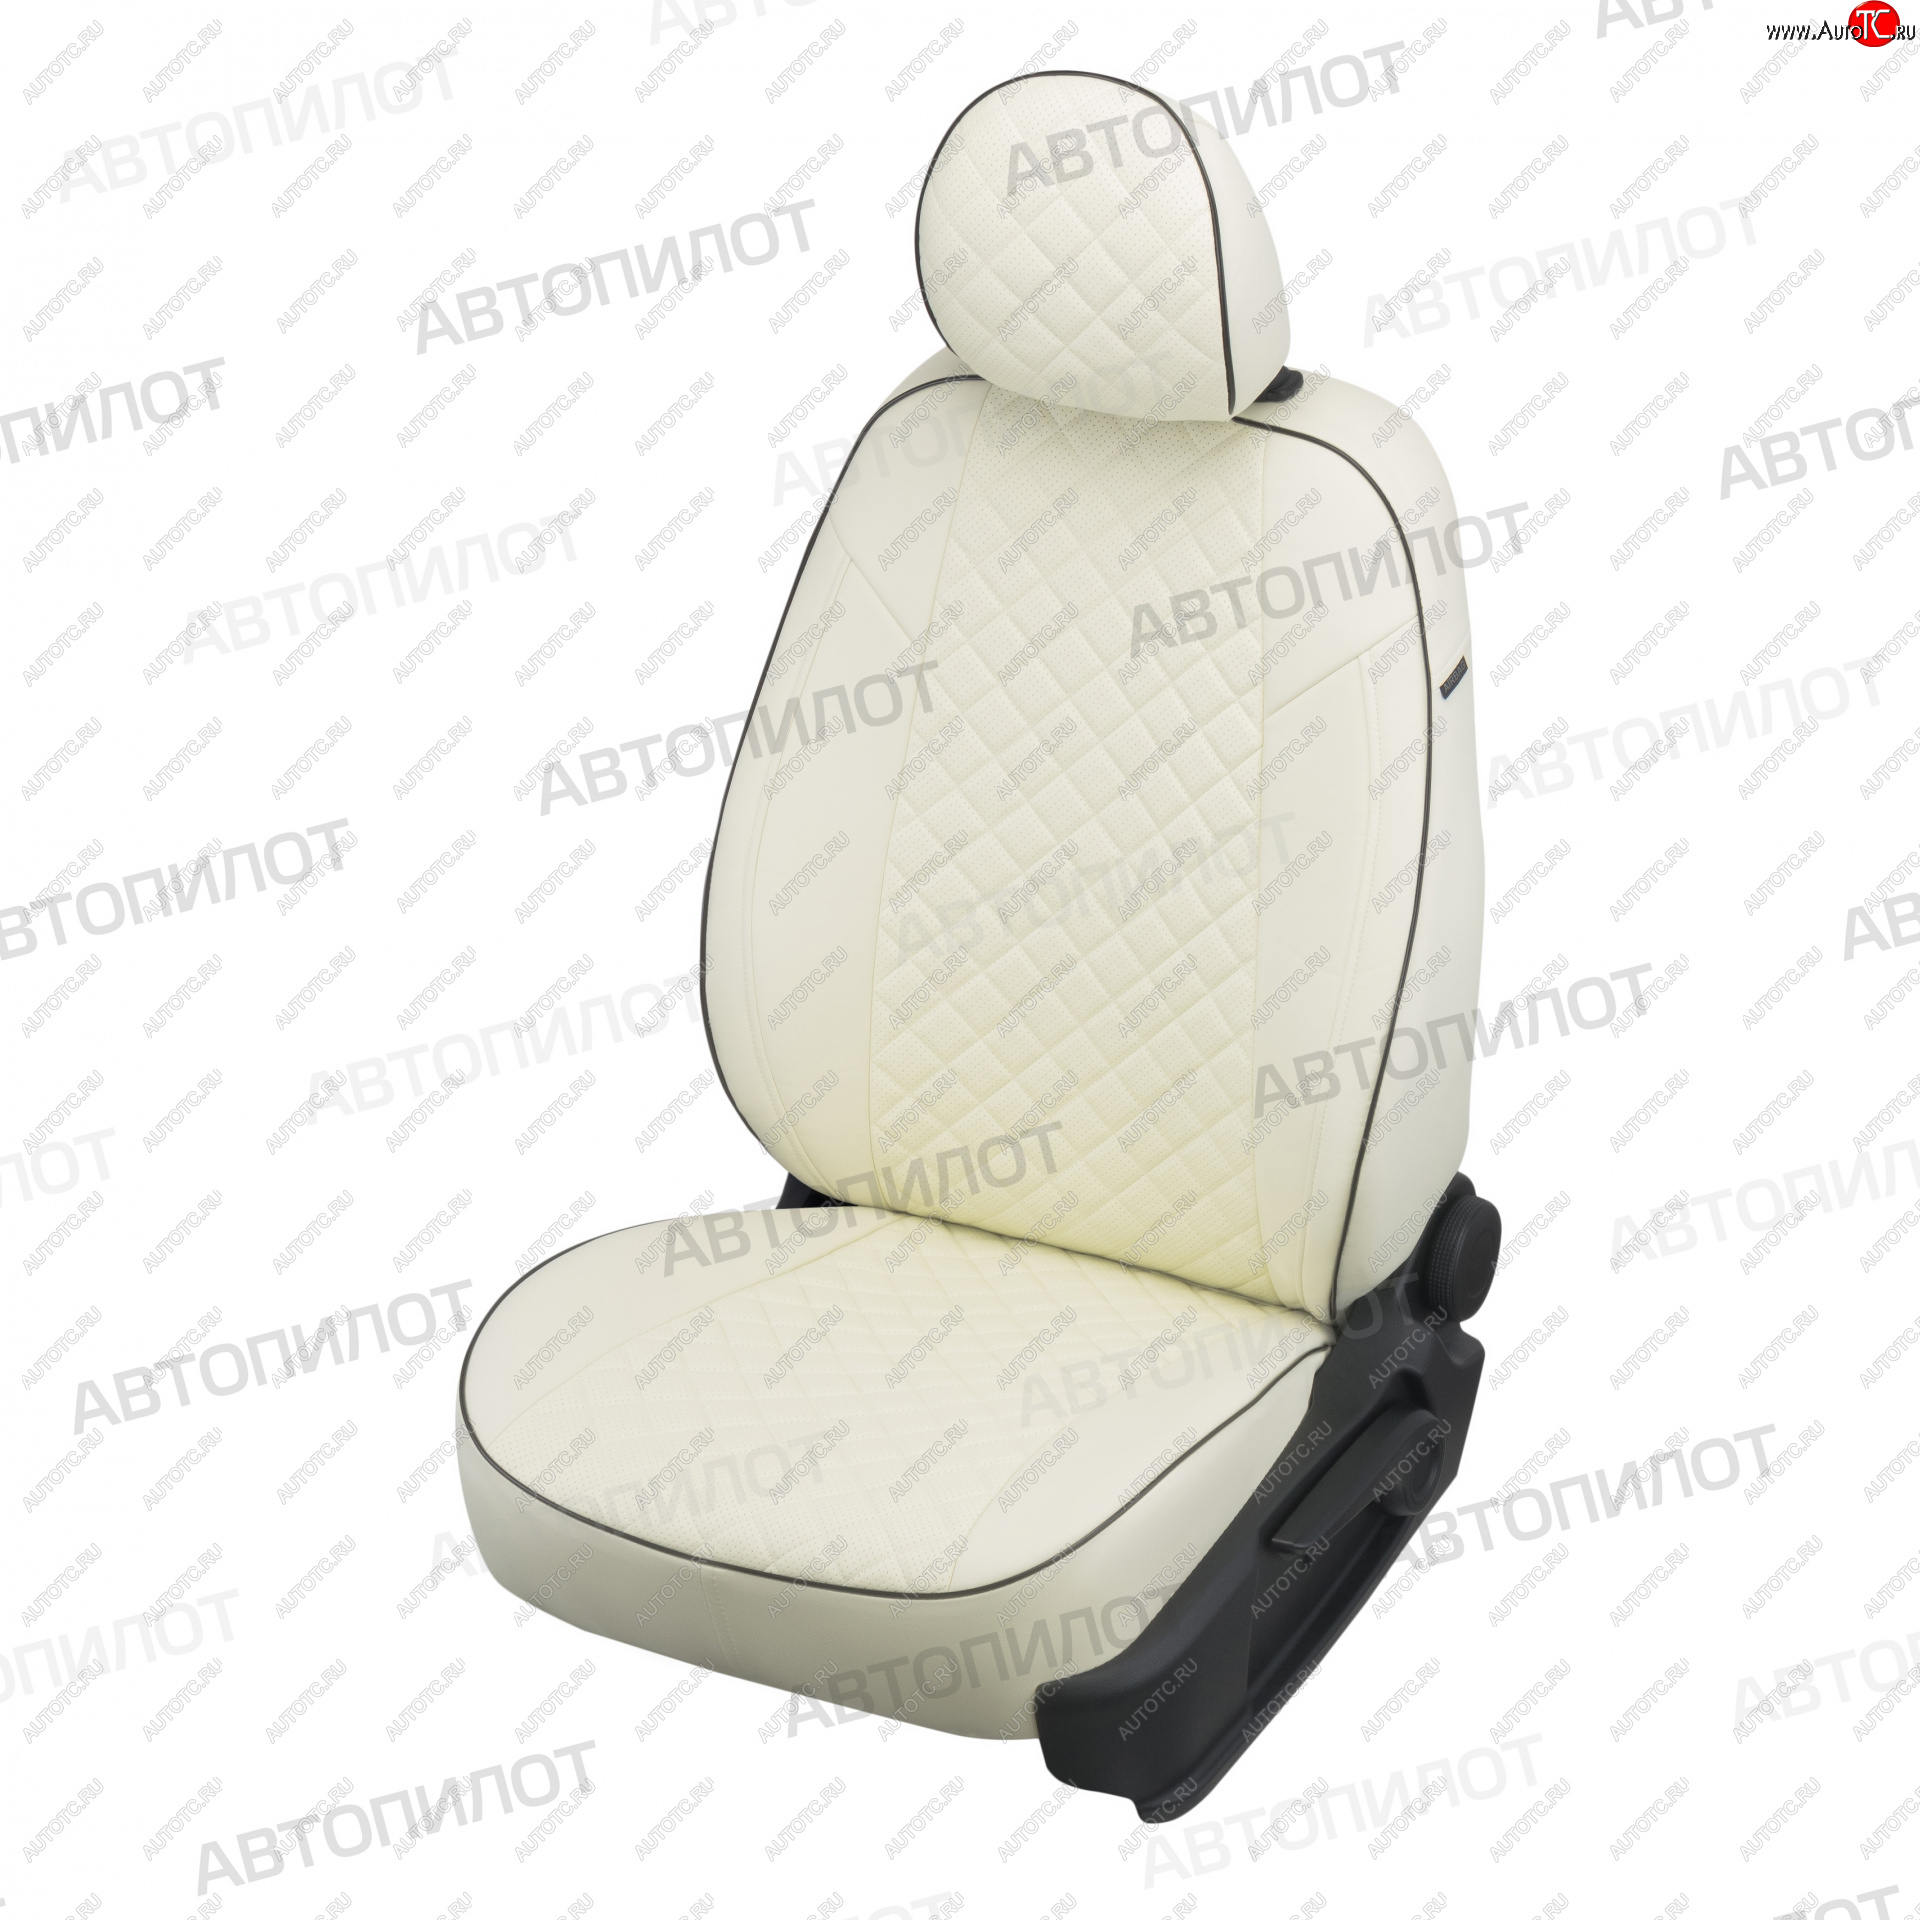 13 999 р. Чехлы сидений (экокожа) Автопилот Ромб  Hyundai Sonata  YF (2009-2014) (белый)